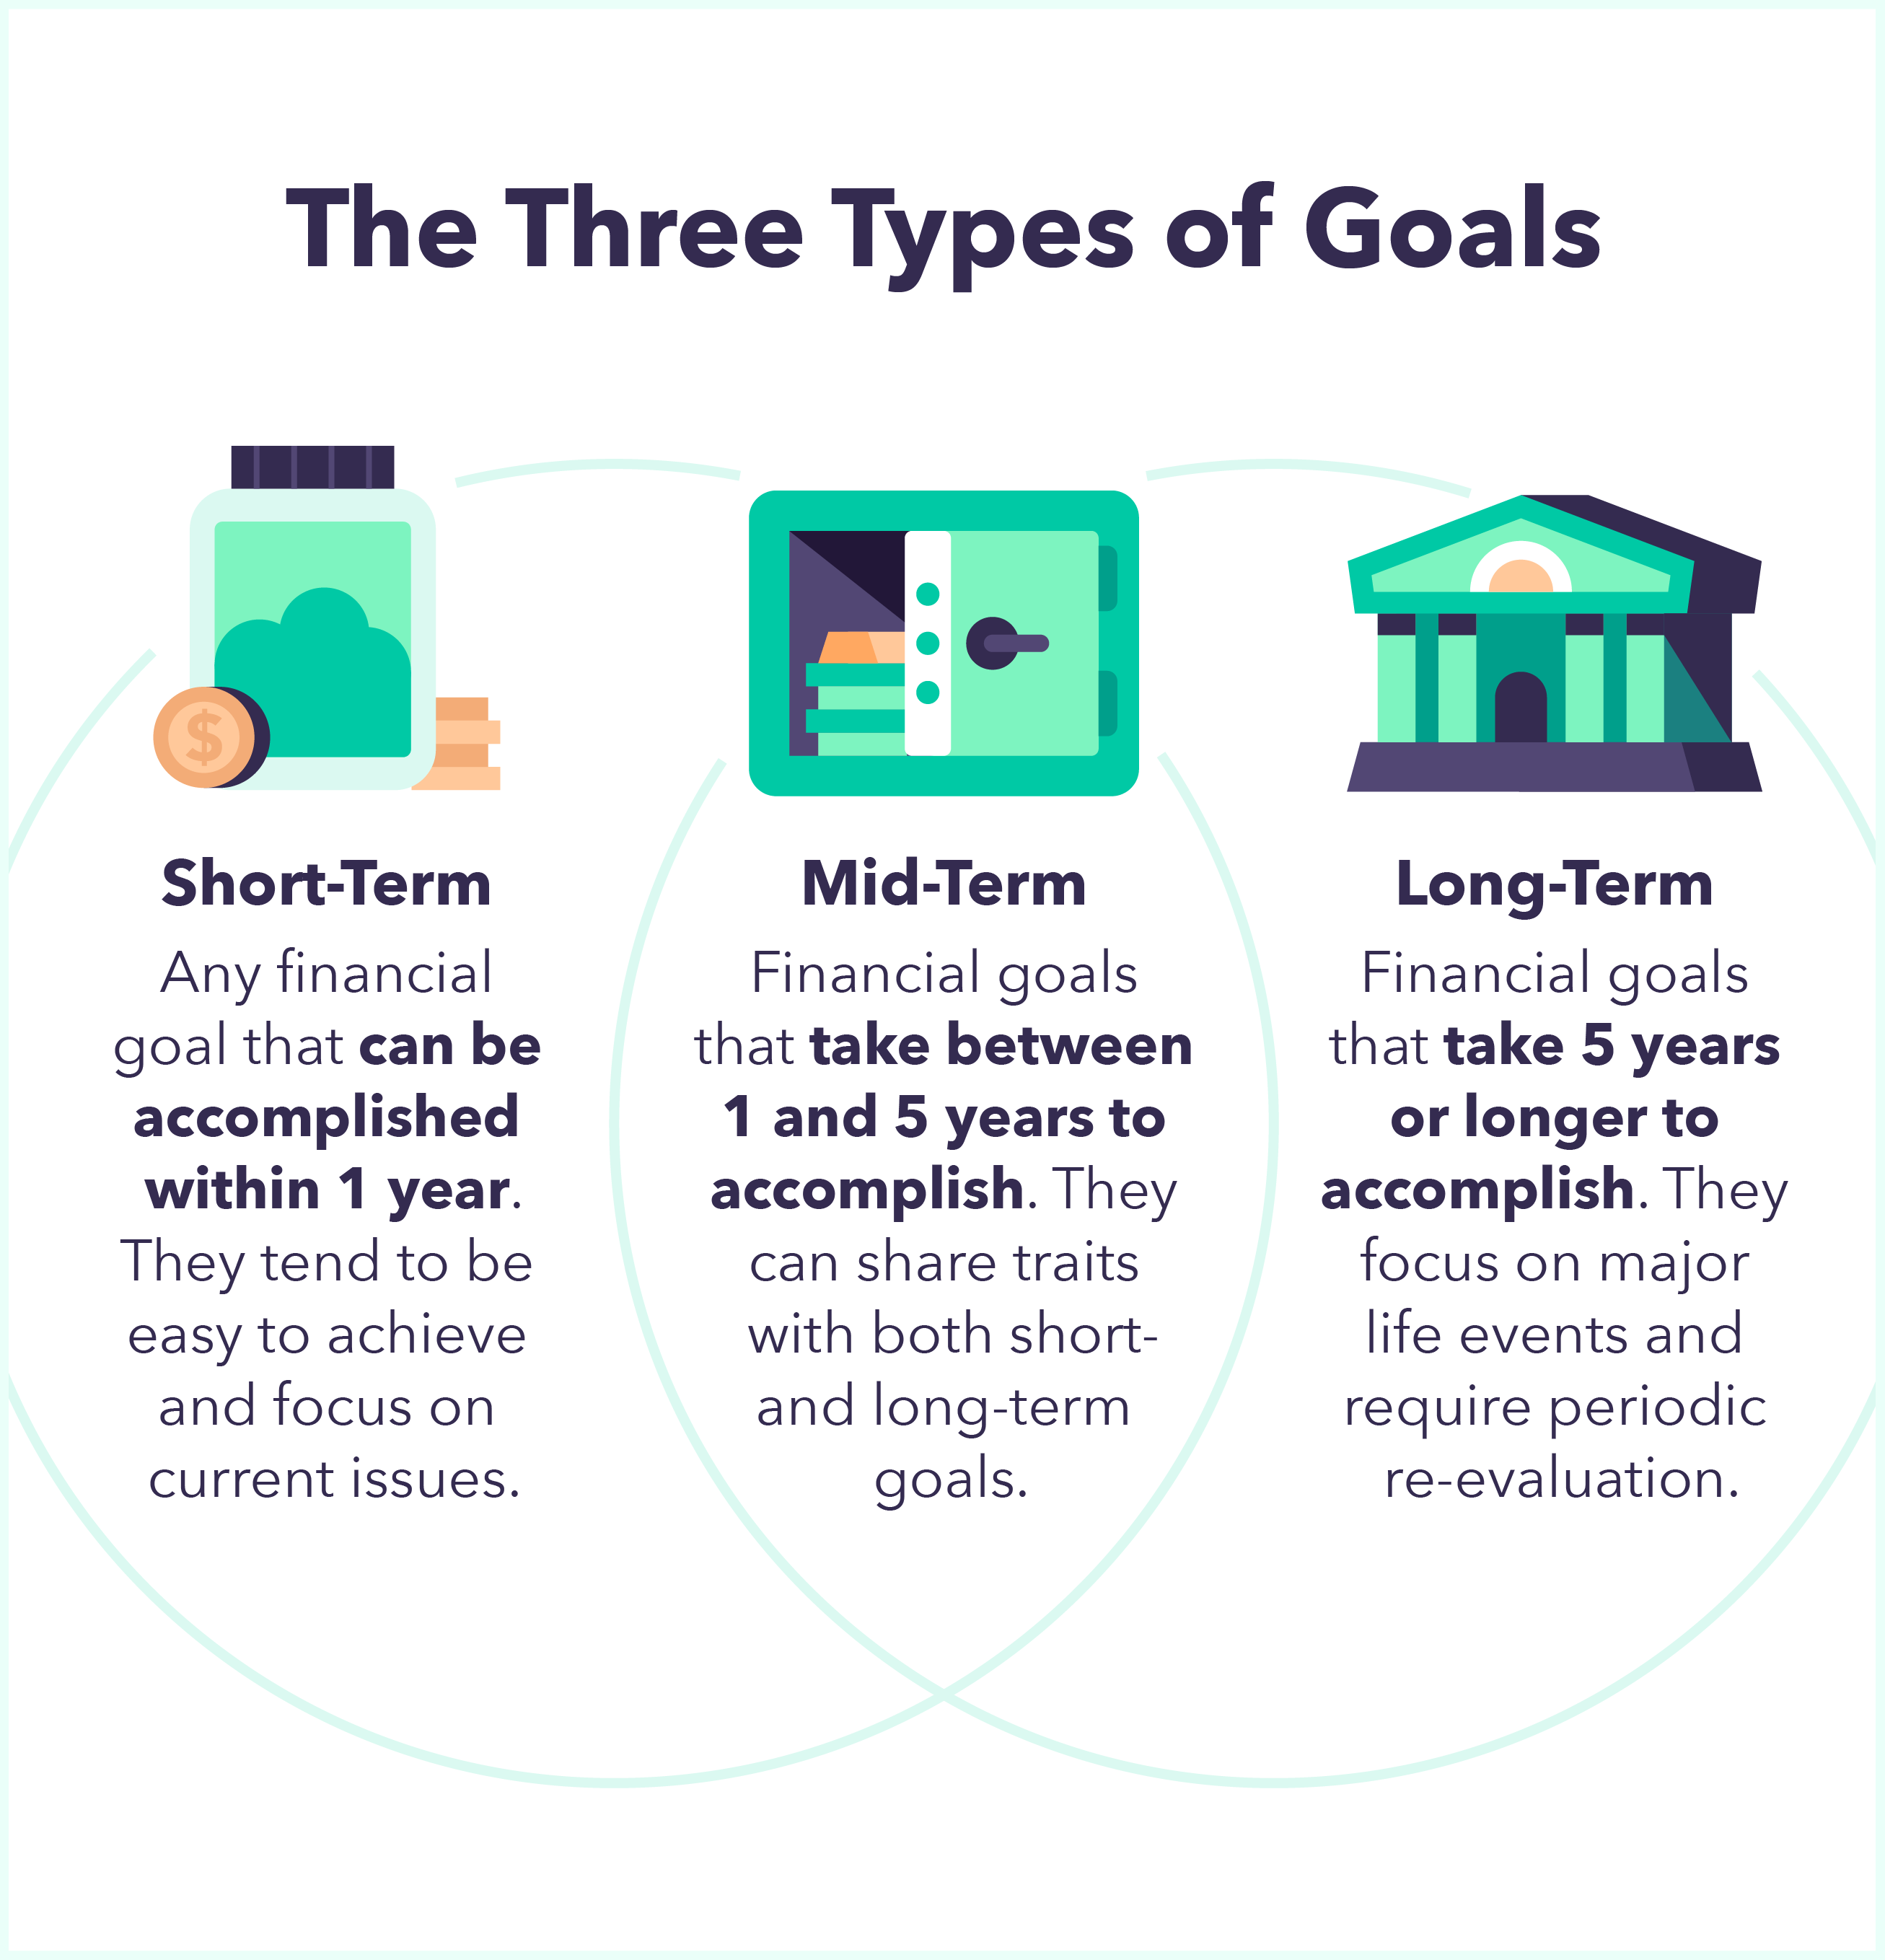 A venn diagram defines short-term, mid-term, and long-term financial goals.